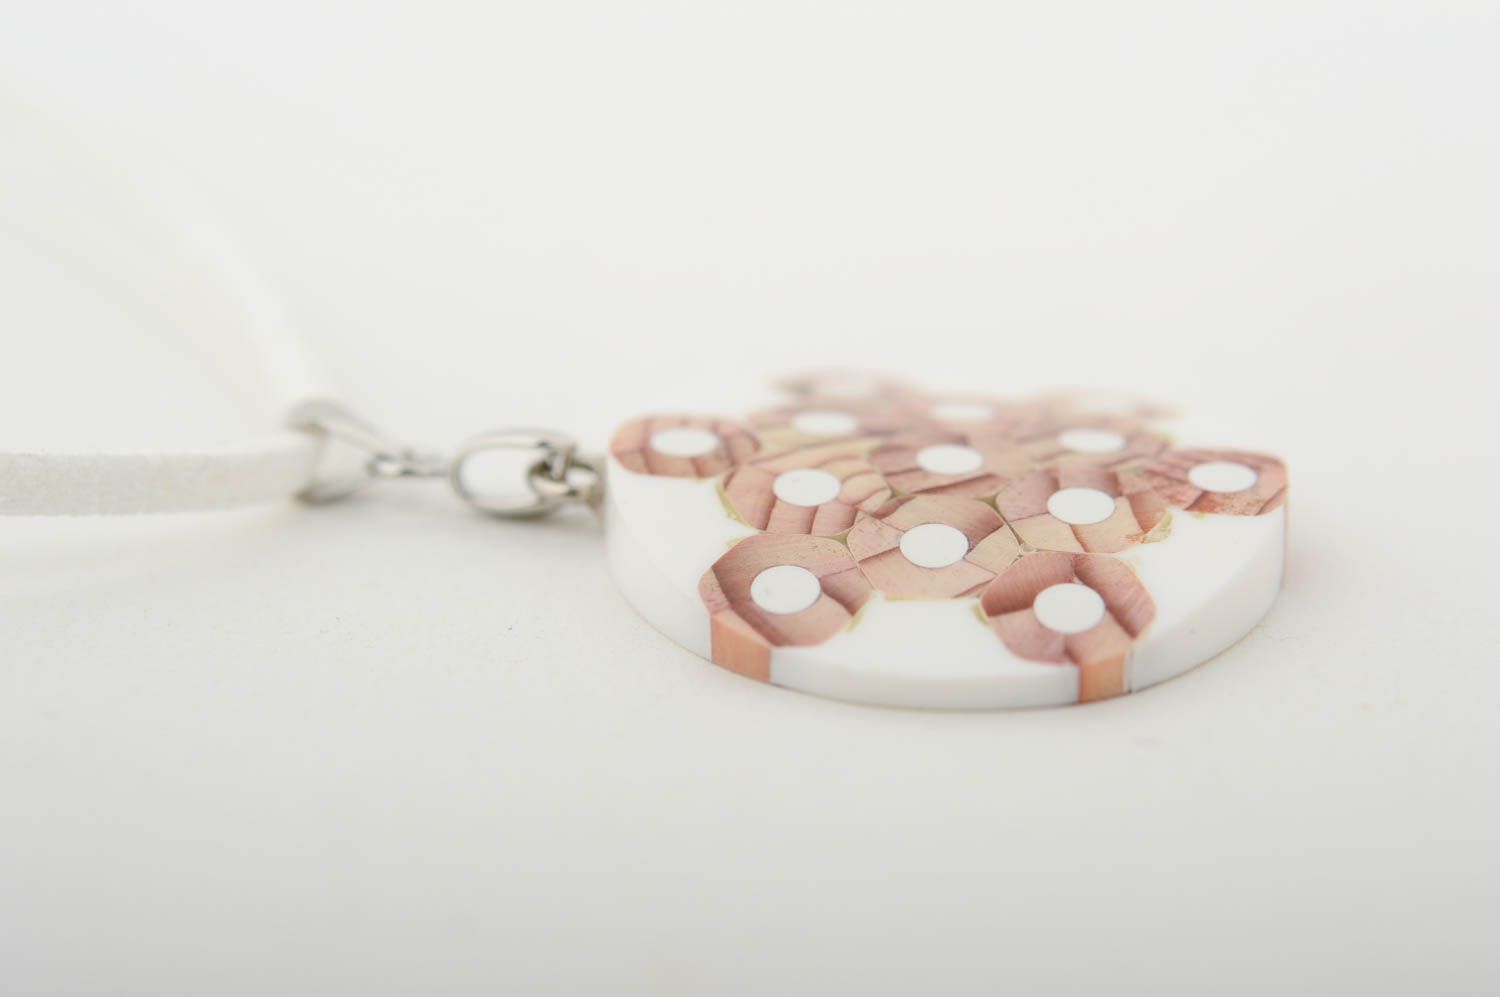 Handmade pendant unusual jewelry designer accessory gift ideas designer pendant photo 4